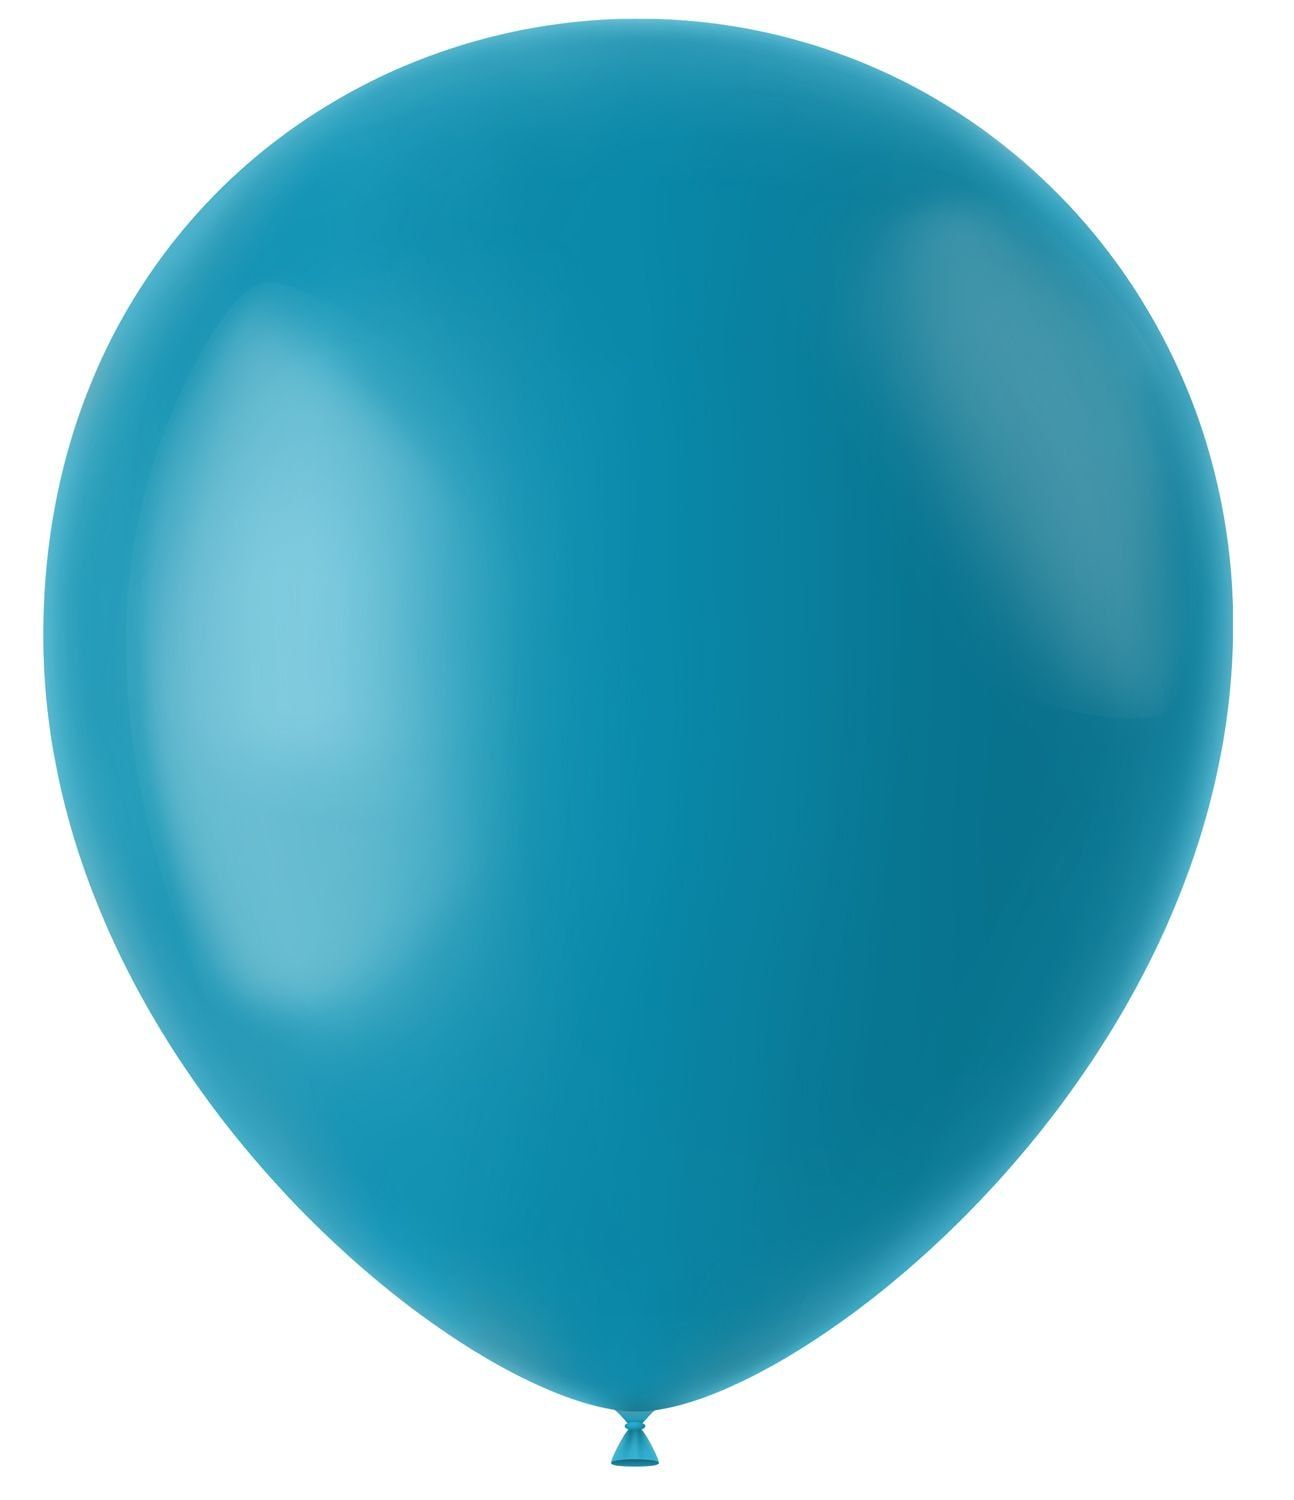 Turquoise ballonnen matte kleur